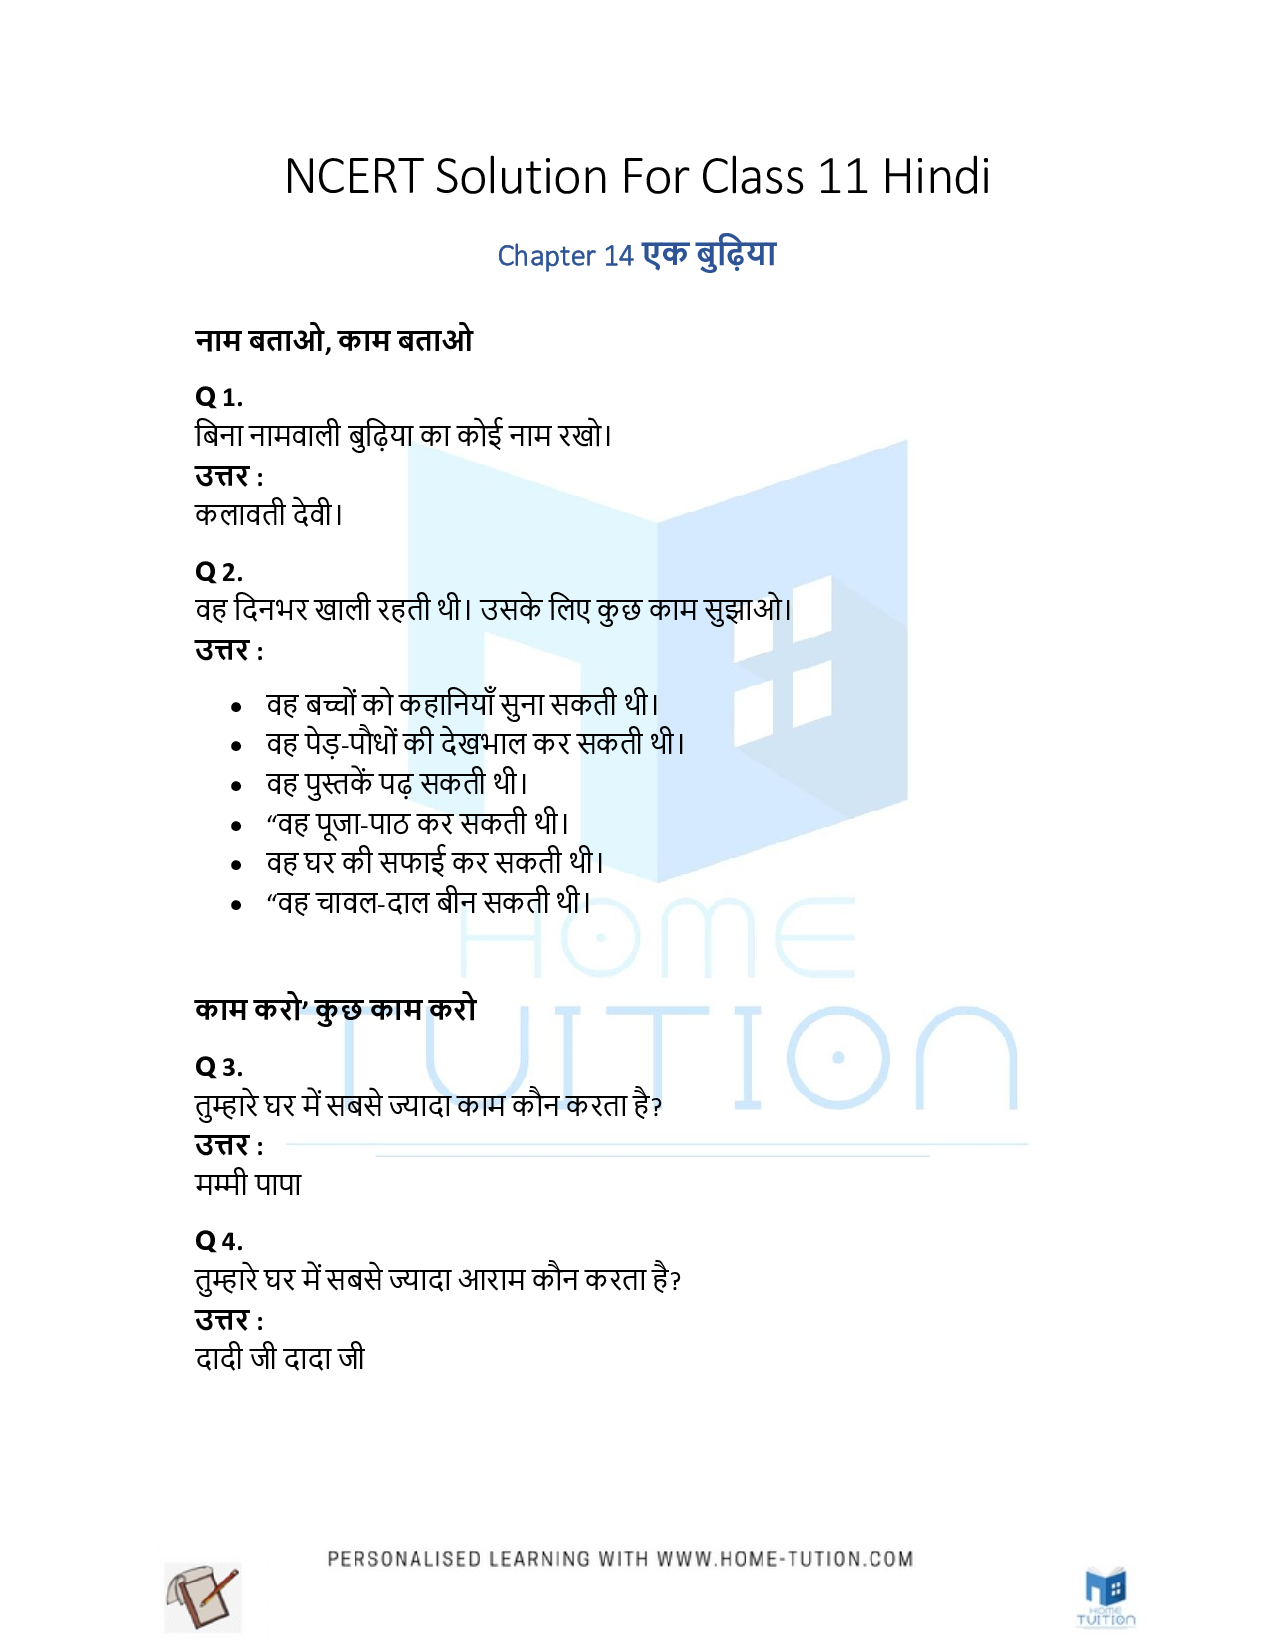 NCERT Solution for Class 1Hindi Chapter 14 Ek Budiya (एक-बुढ़िया)